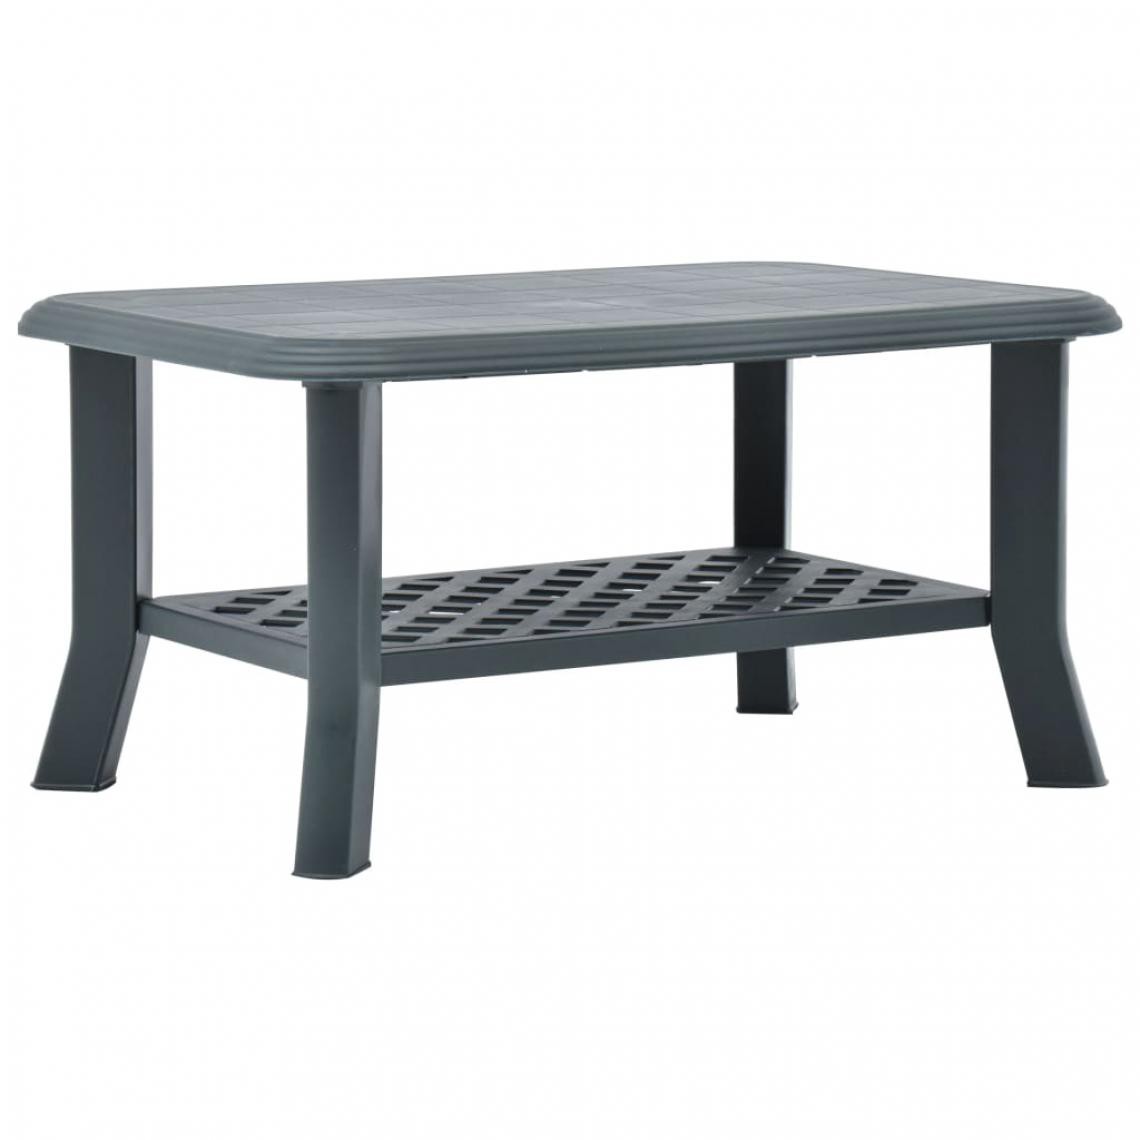 Vidaxl - vidaXL Table basse Vert 90 x 60 x 46 cm Plastique - Tables basses